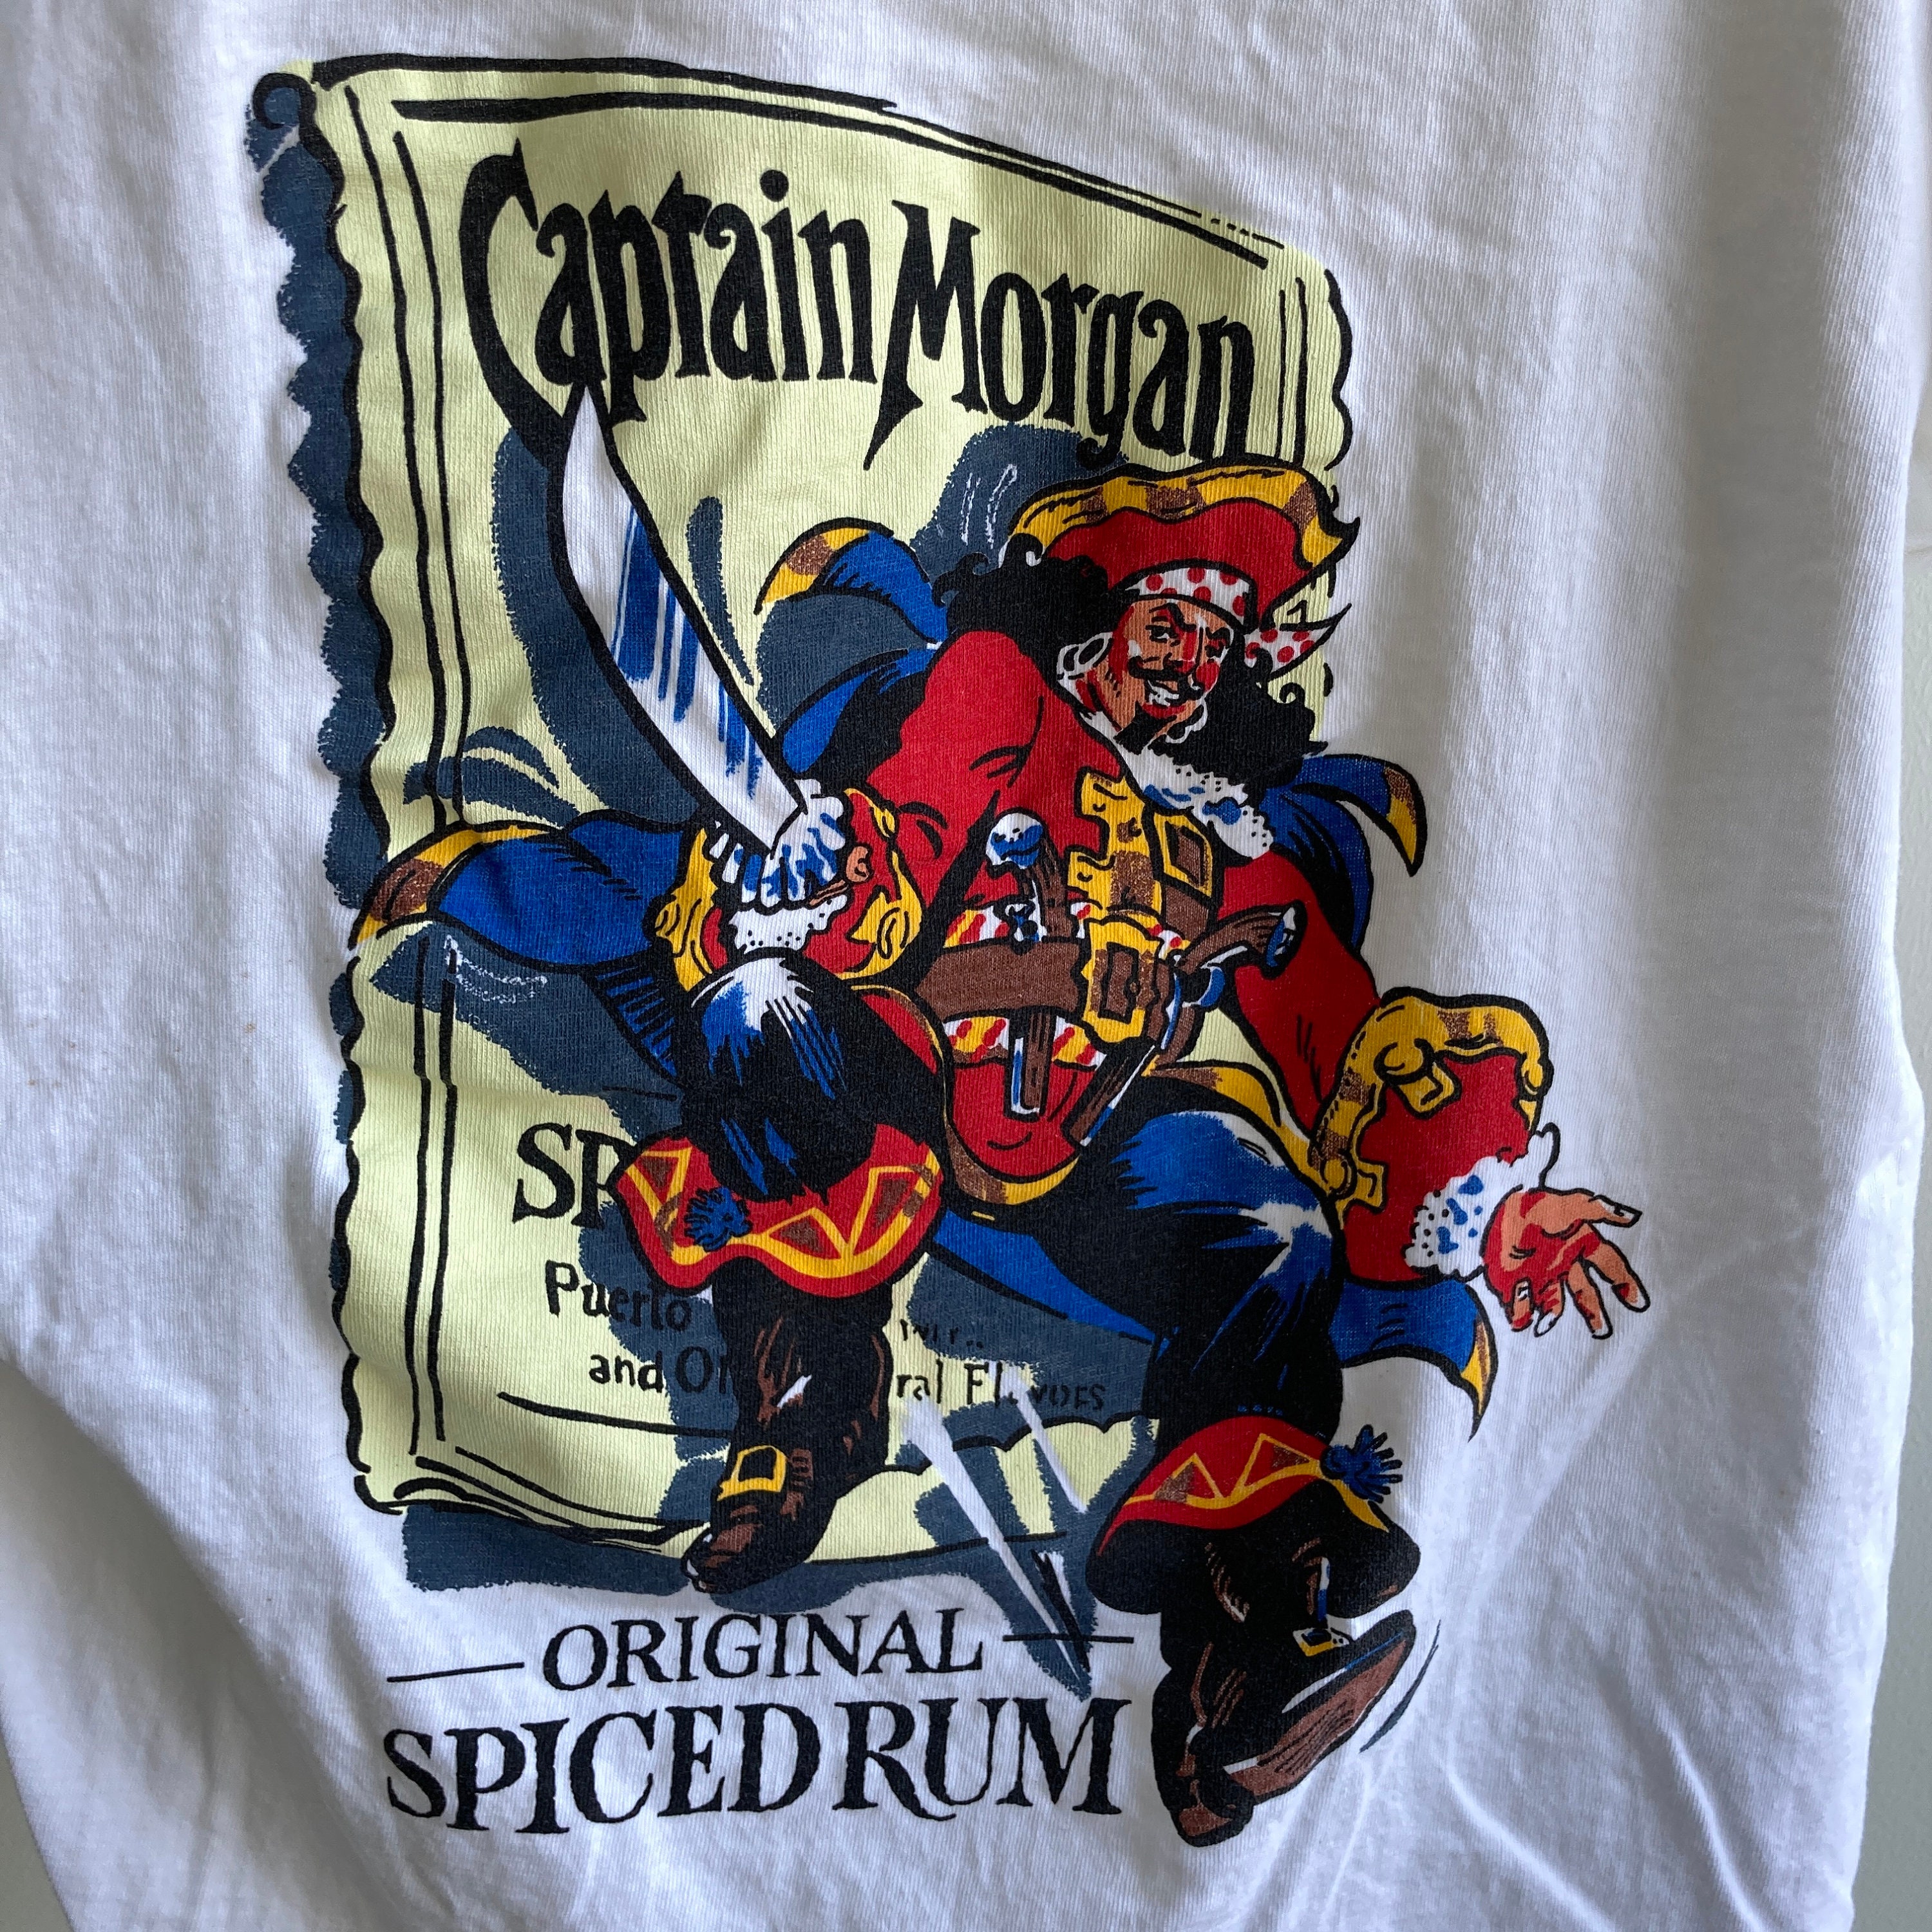 Vintage 90s Captain Morgan Cotton T-Shirt Backside Photo | Etsy